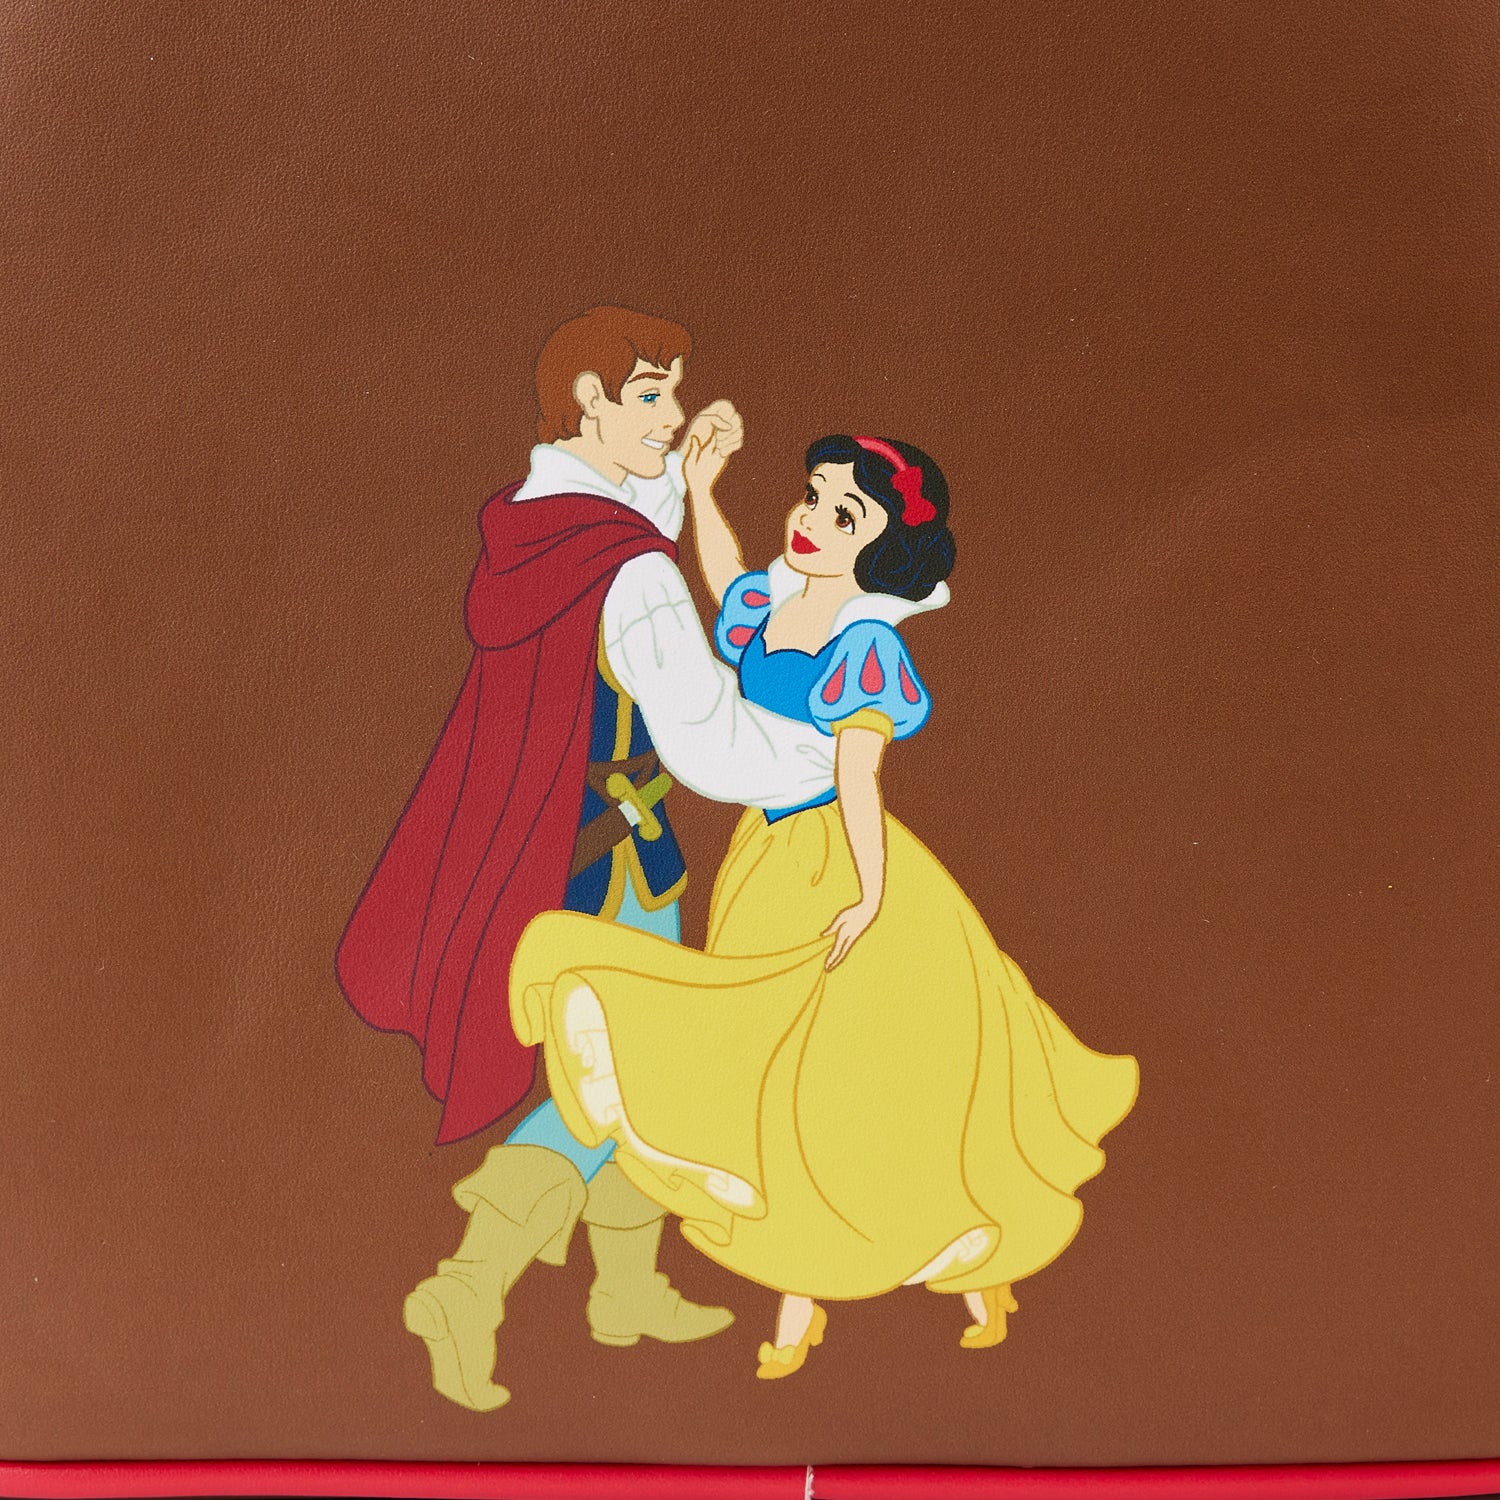 Sleeping Beauty Princess Series Lenticular Mini Backpack